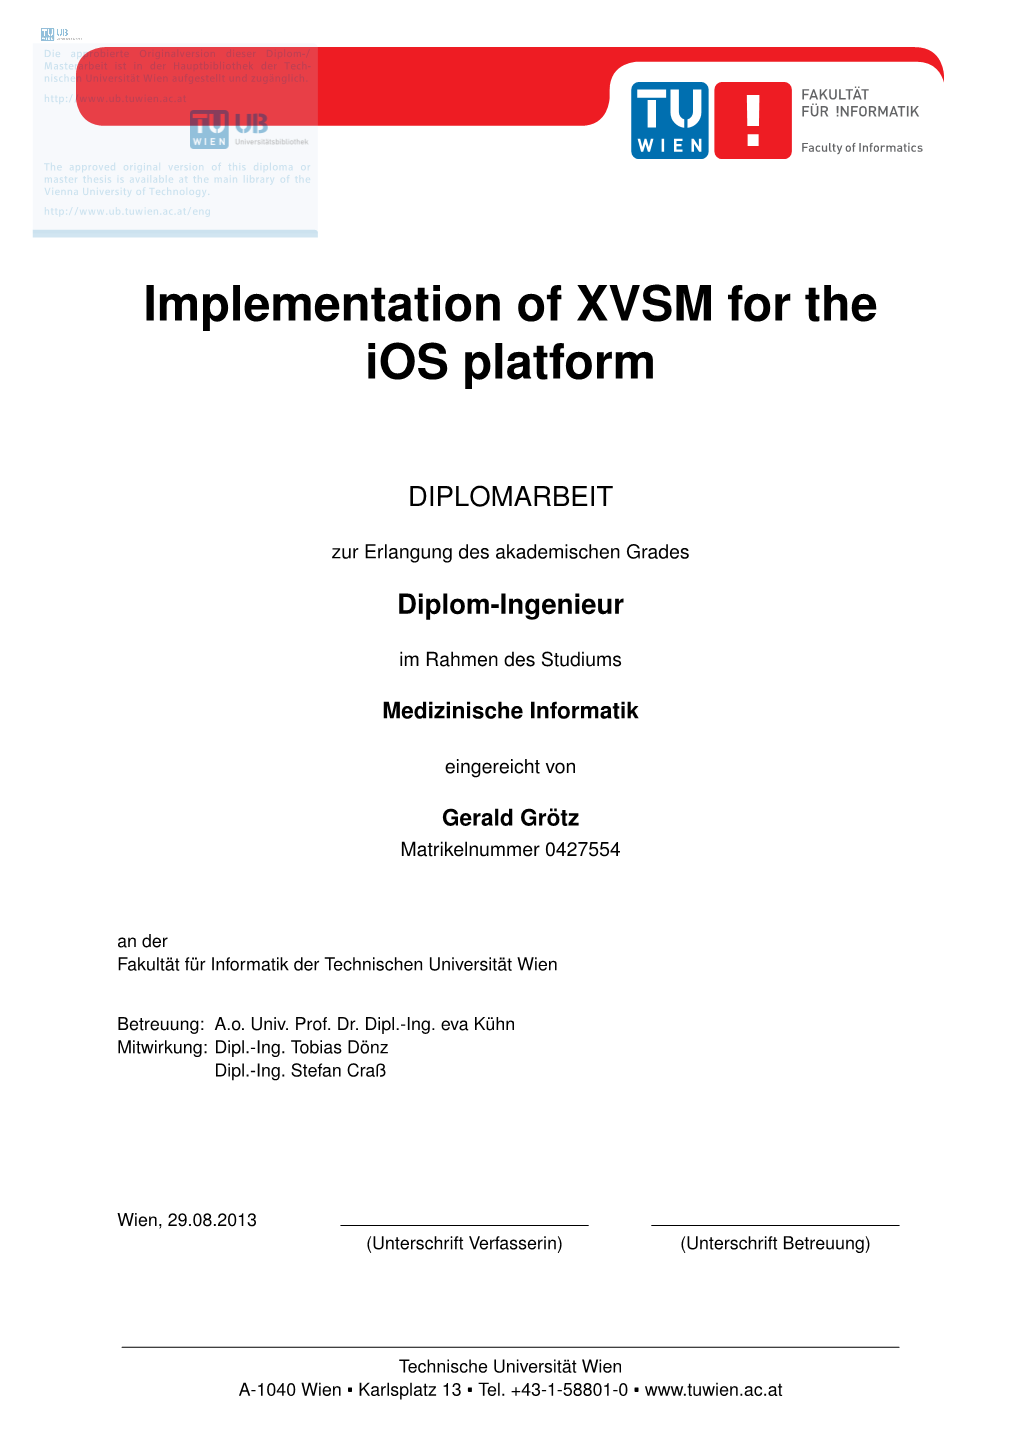 Implementation of XVSM for the Ios Platform